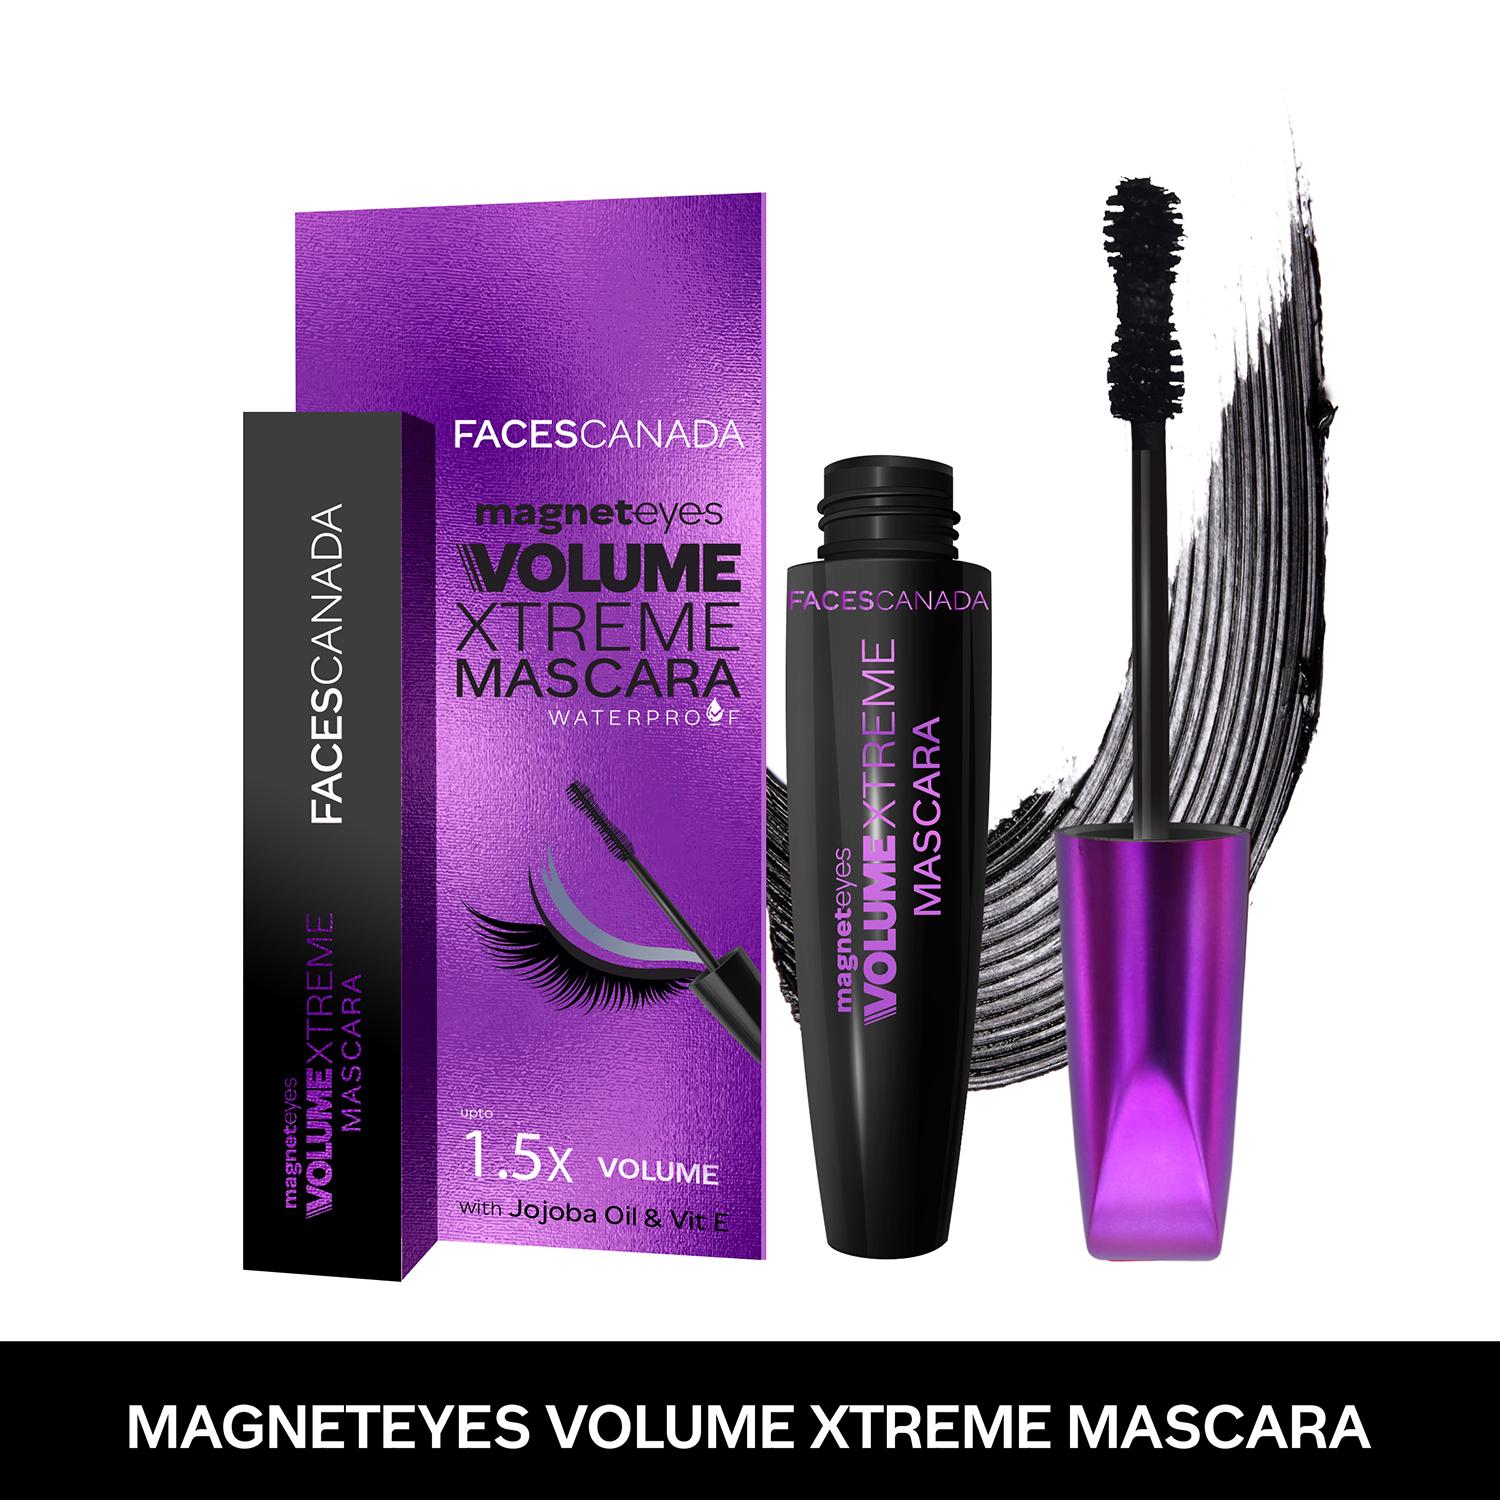 Faces Canada | Faces Canada Magneteyes Volume Xtreme Mascara - Black, Lengthens Lashes, Waterproof, Long Wear (8 g)